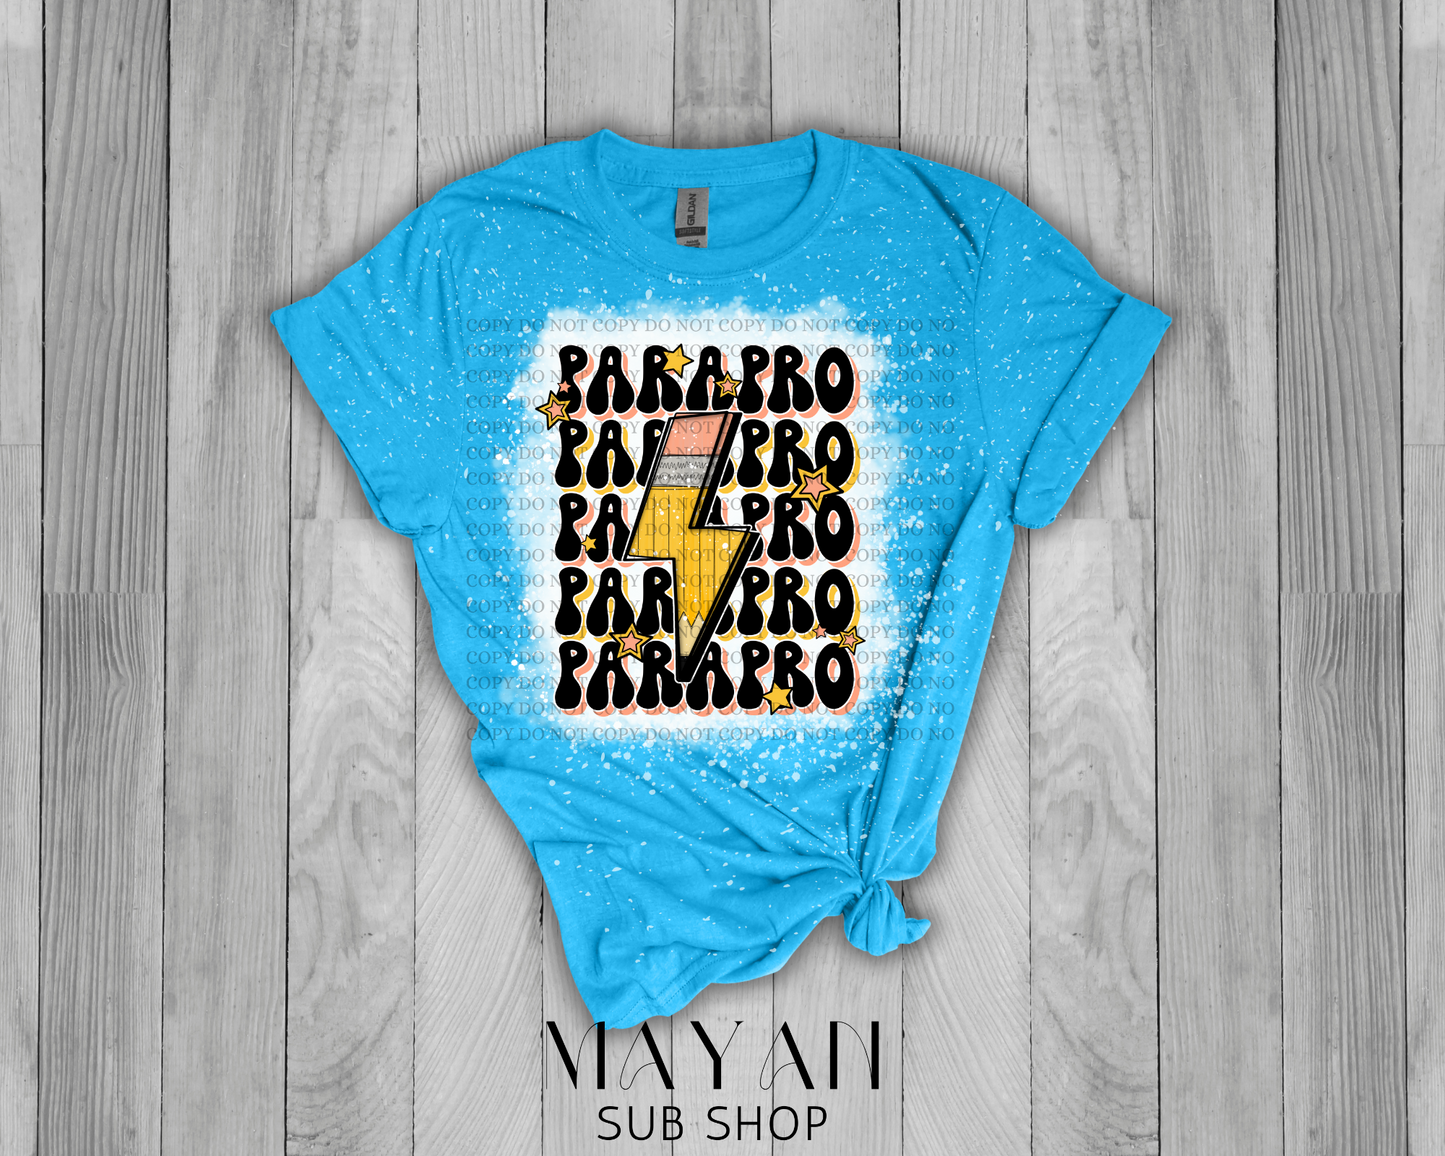 Parapro Retro Bleached Shirt - Mayan Sub Shop